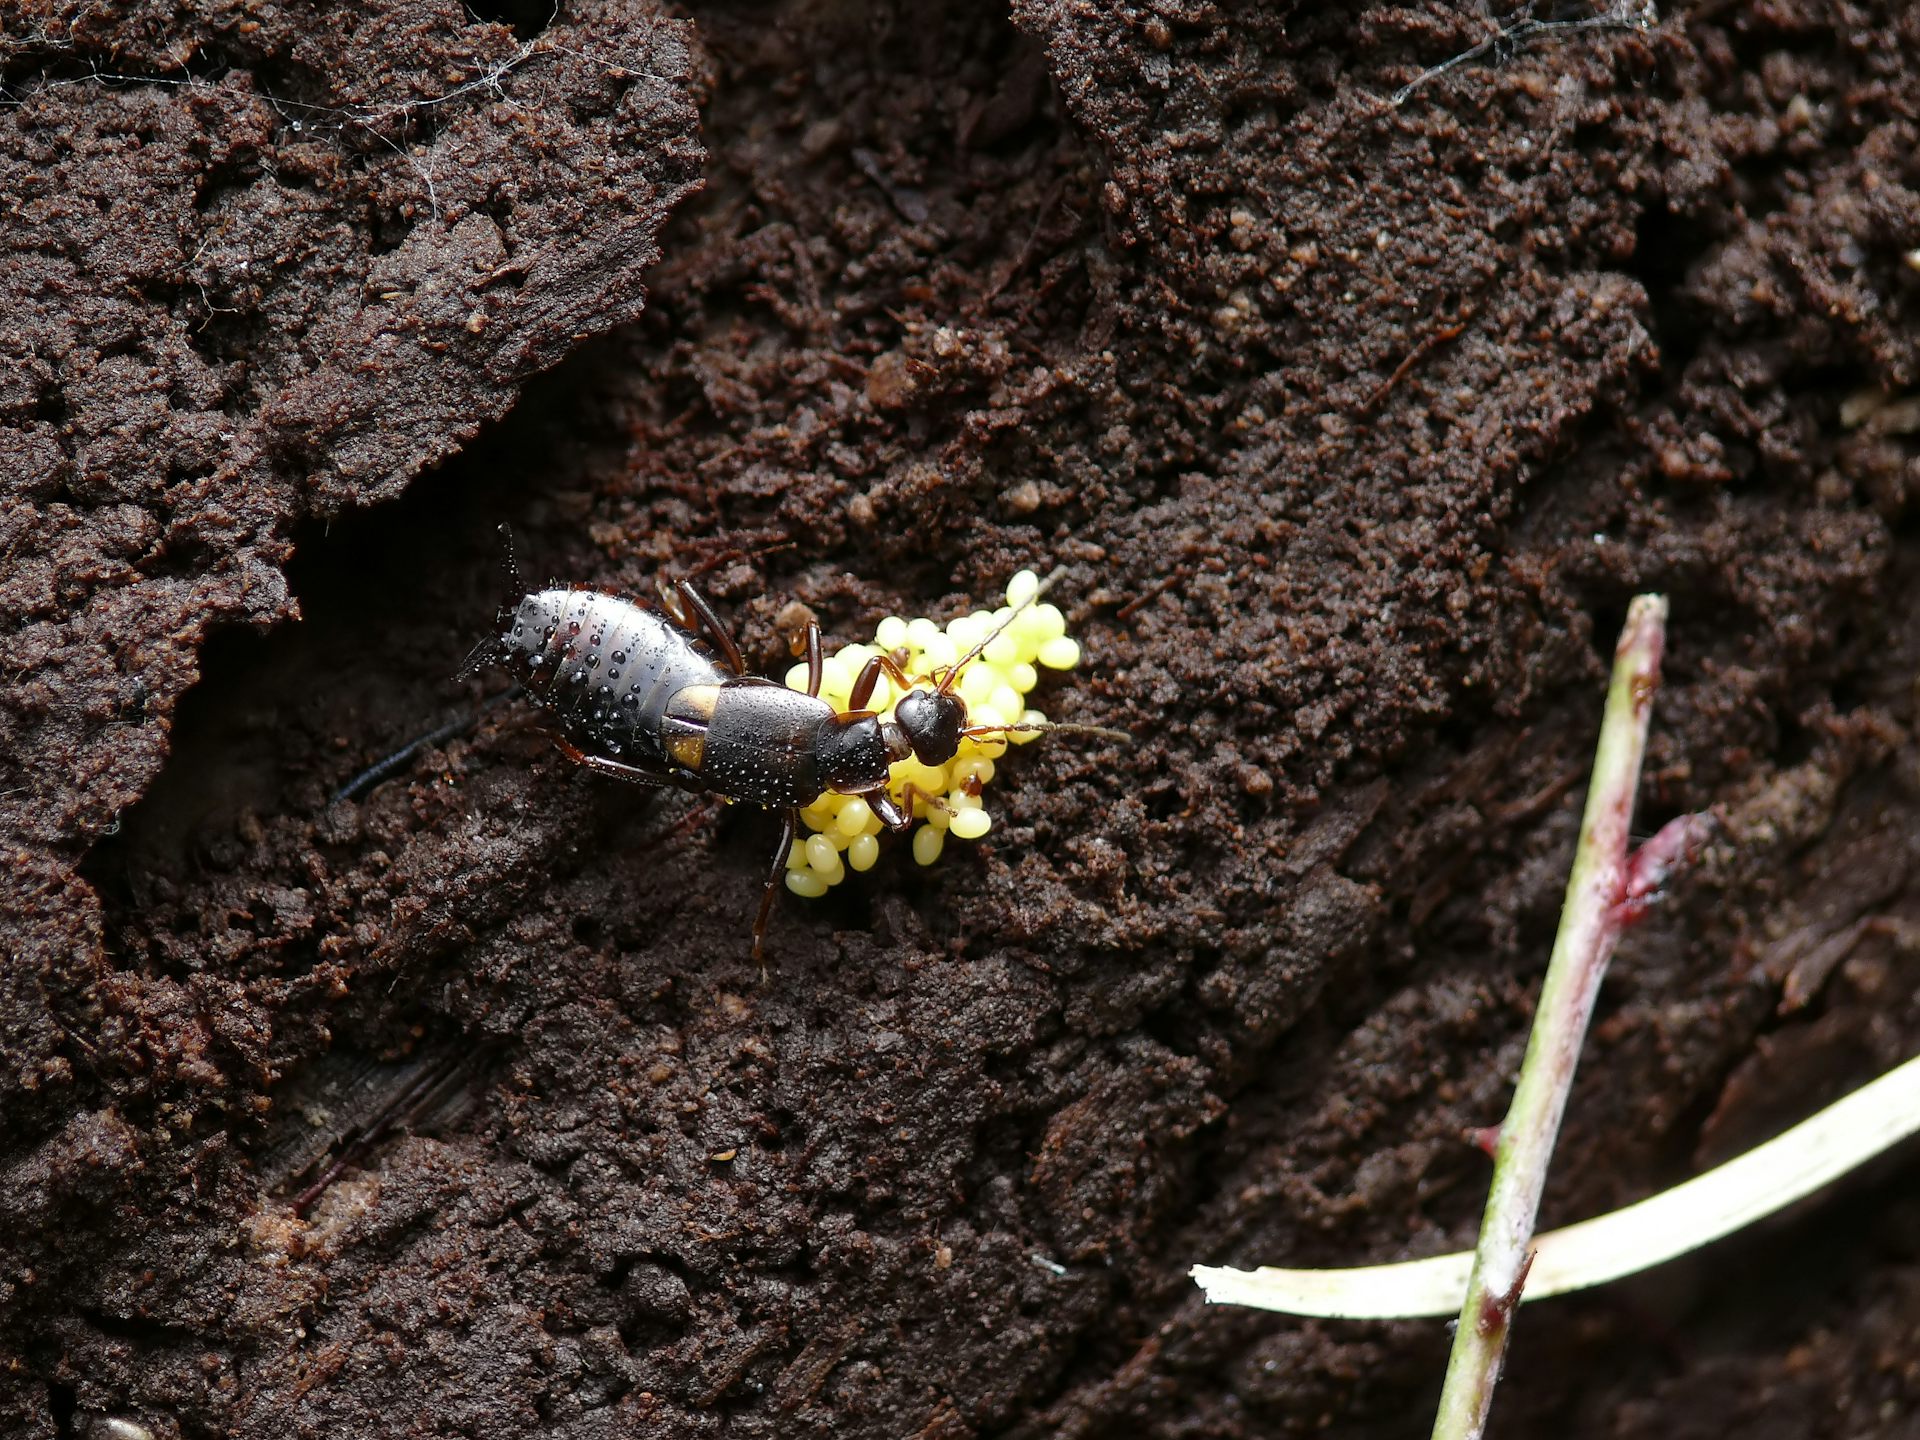 Female earwig protecting her eggs